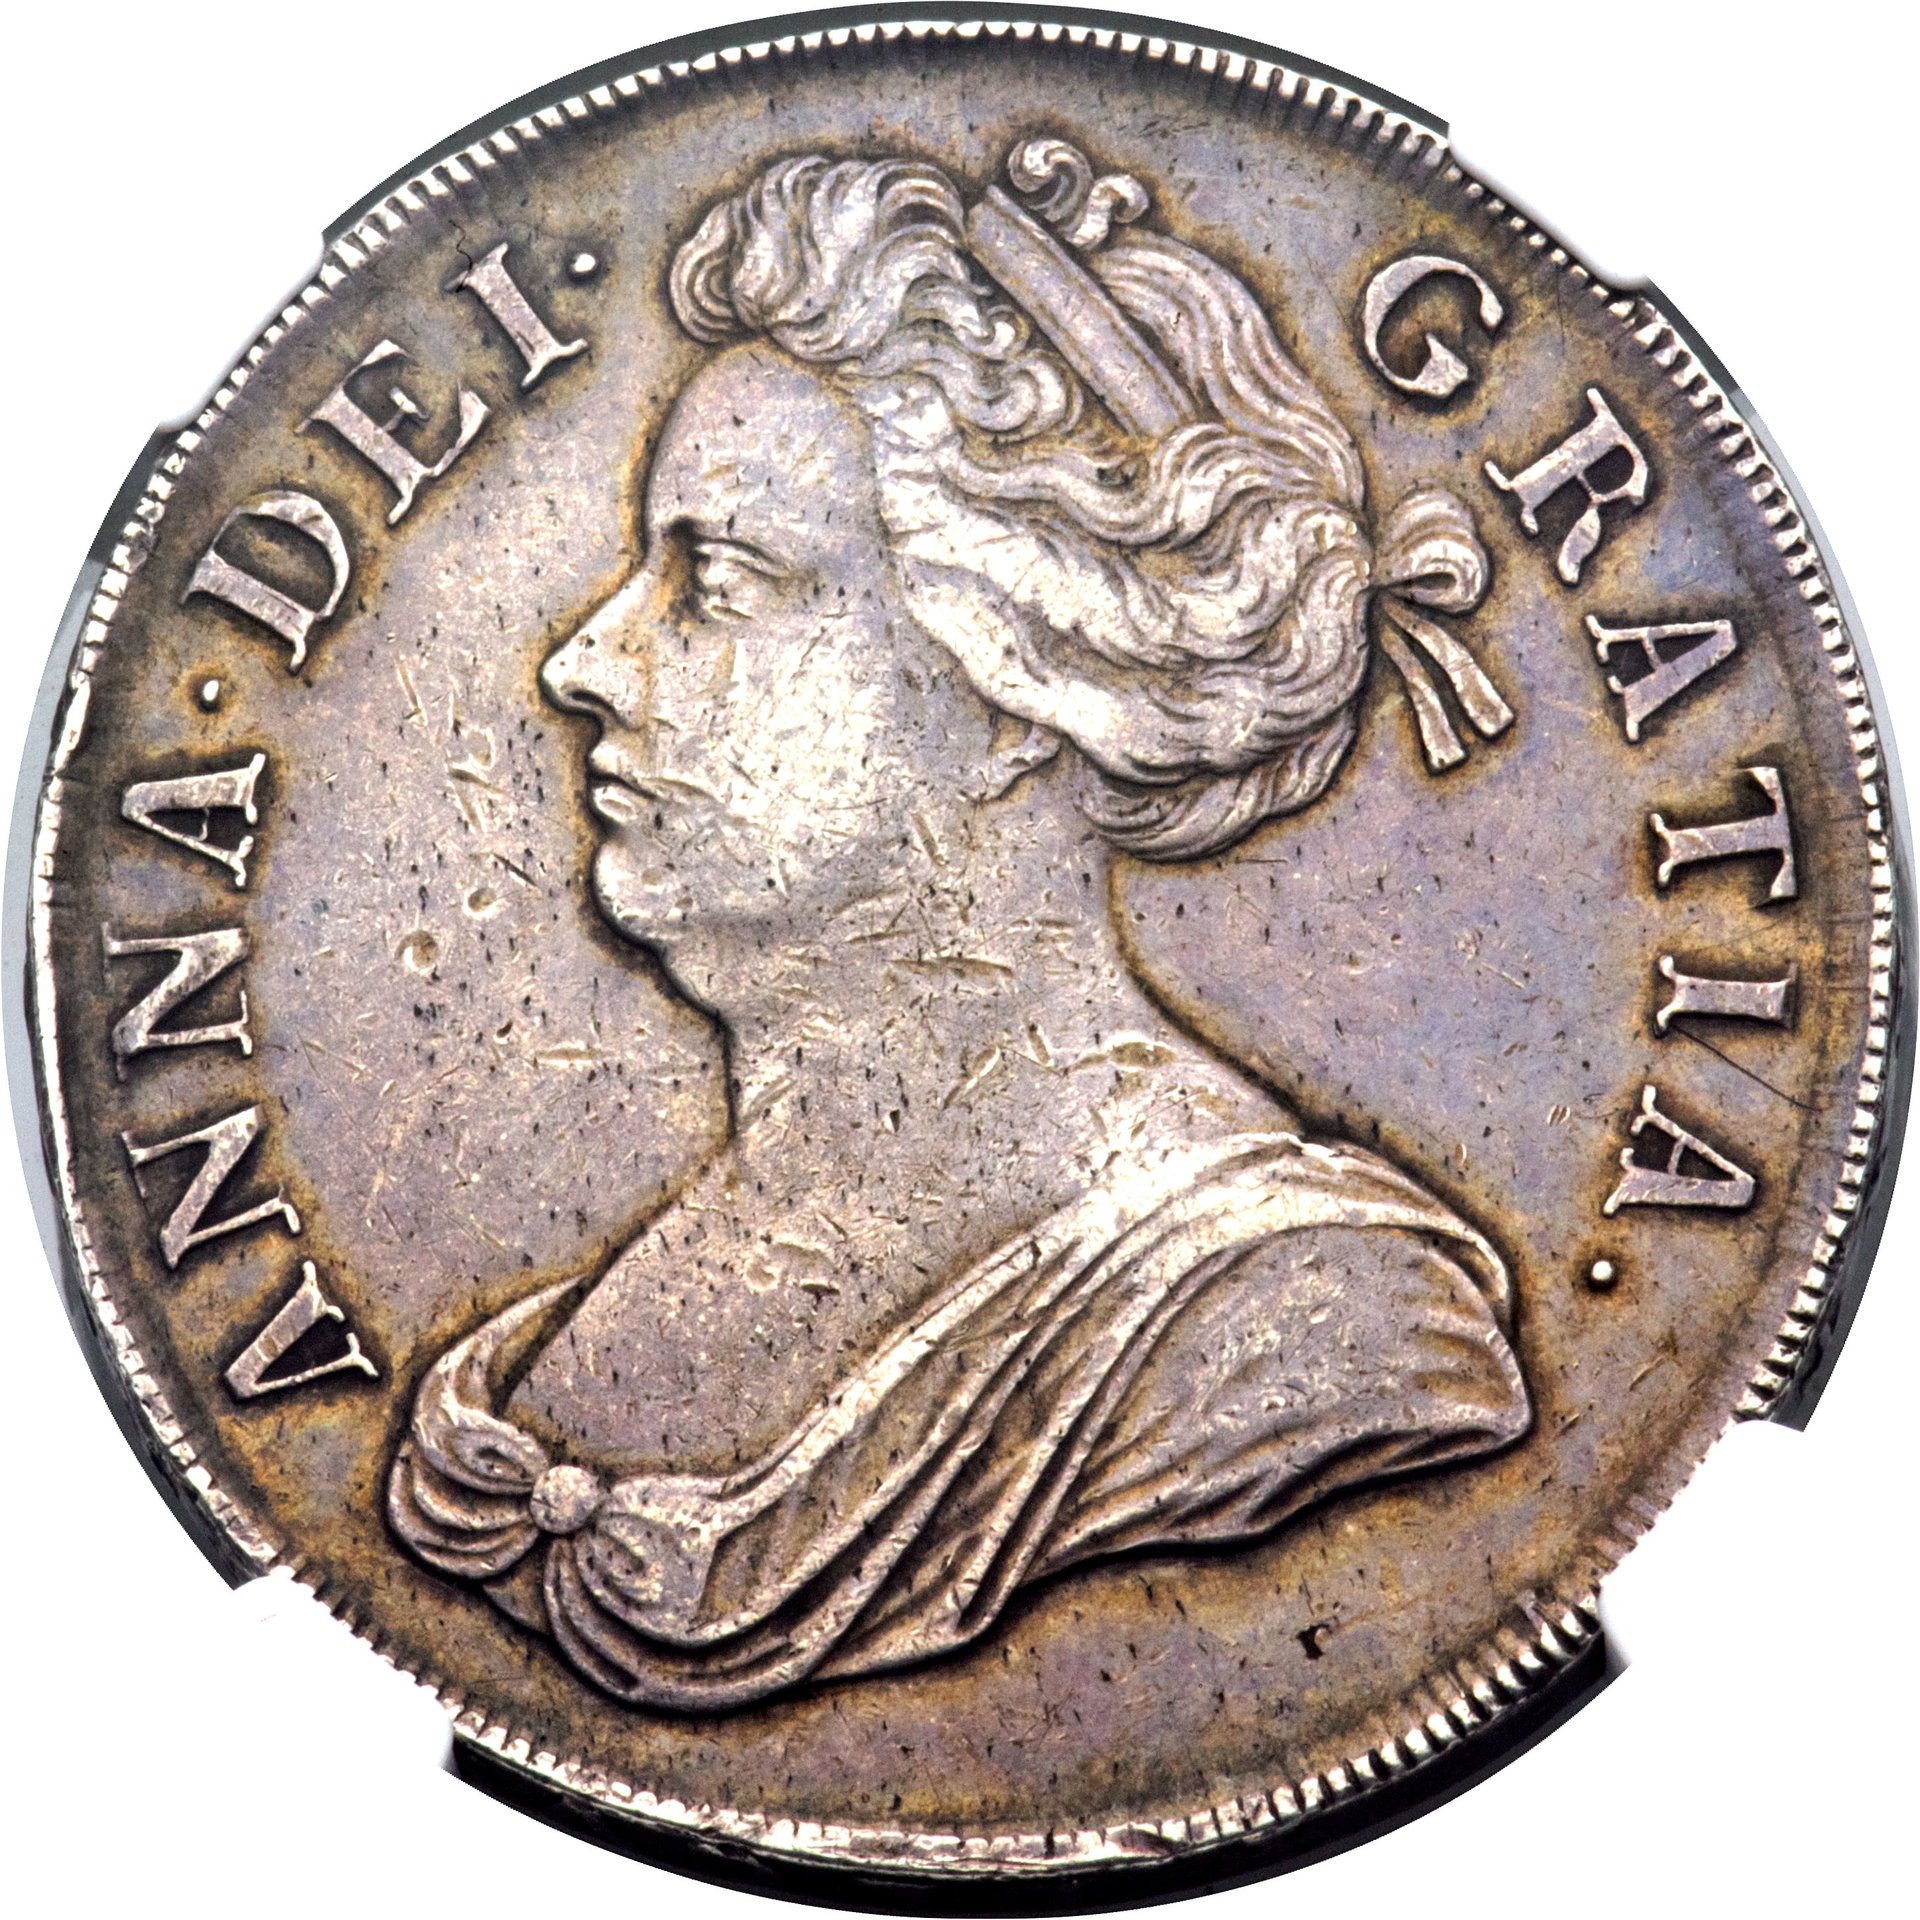 Queen Anne 1707 Crown.jpg